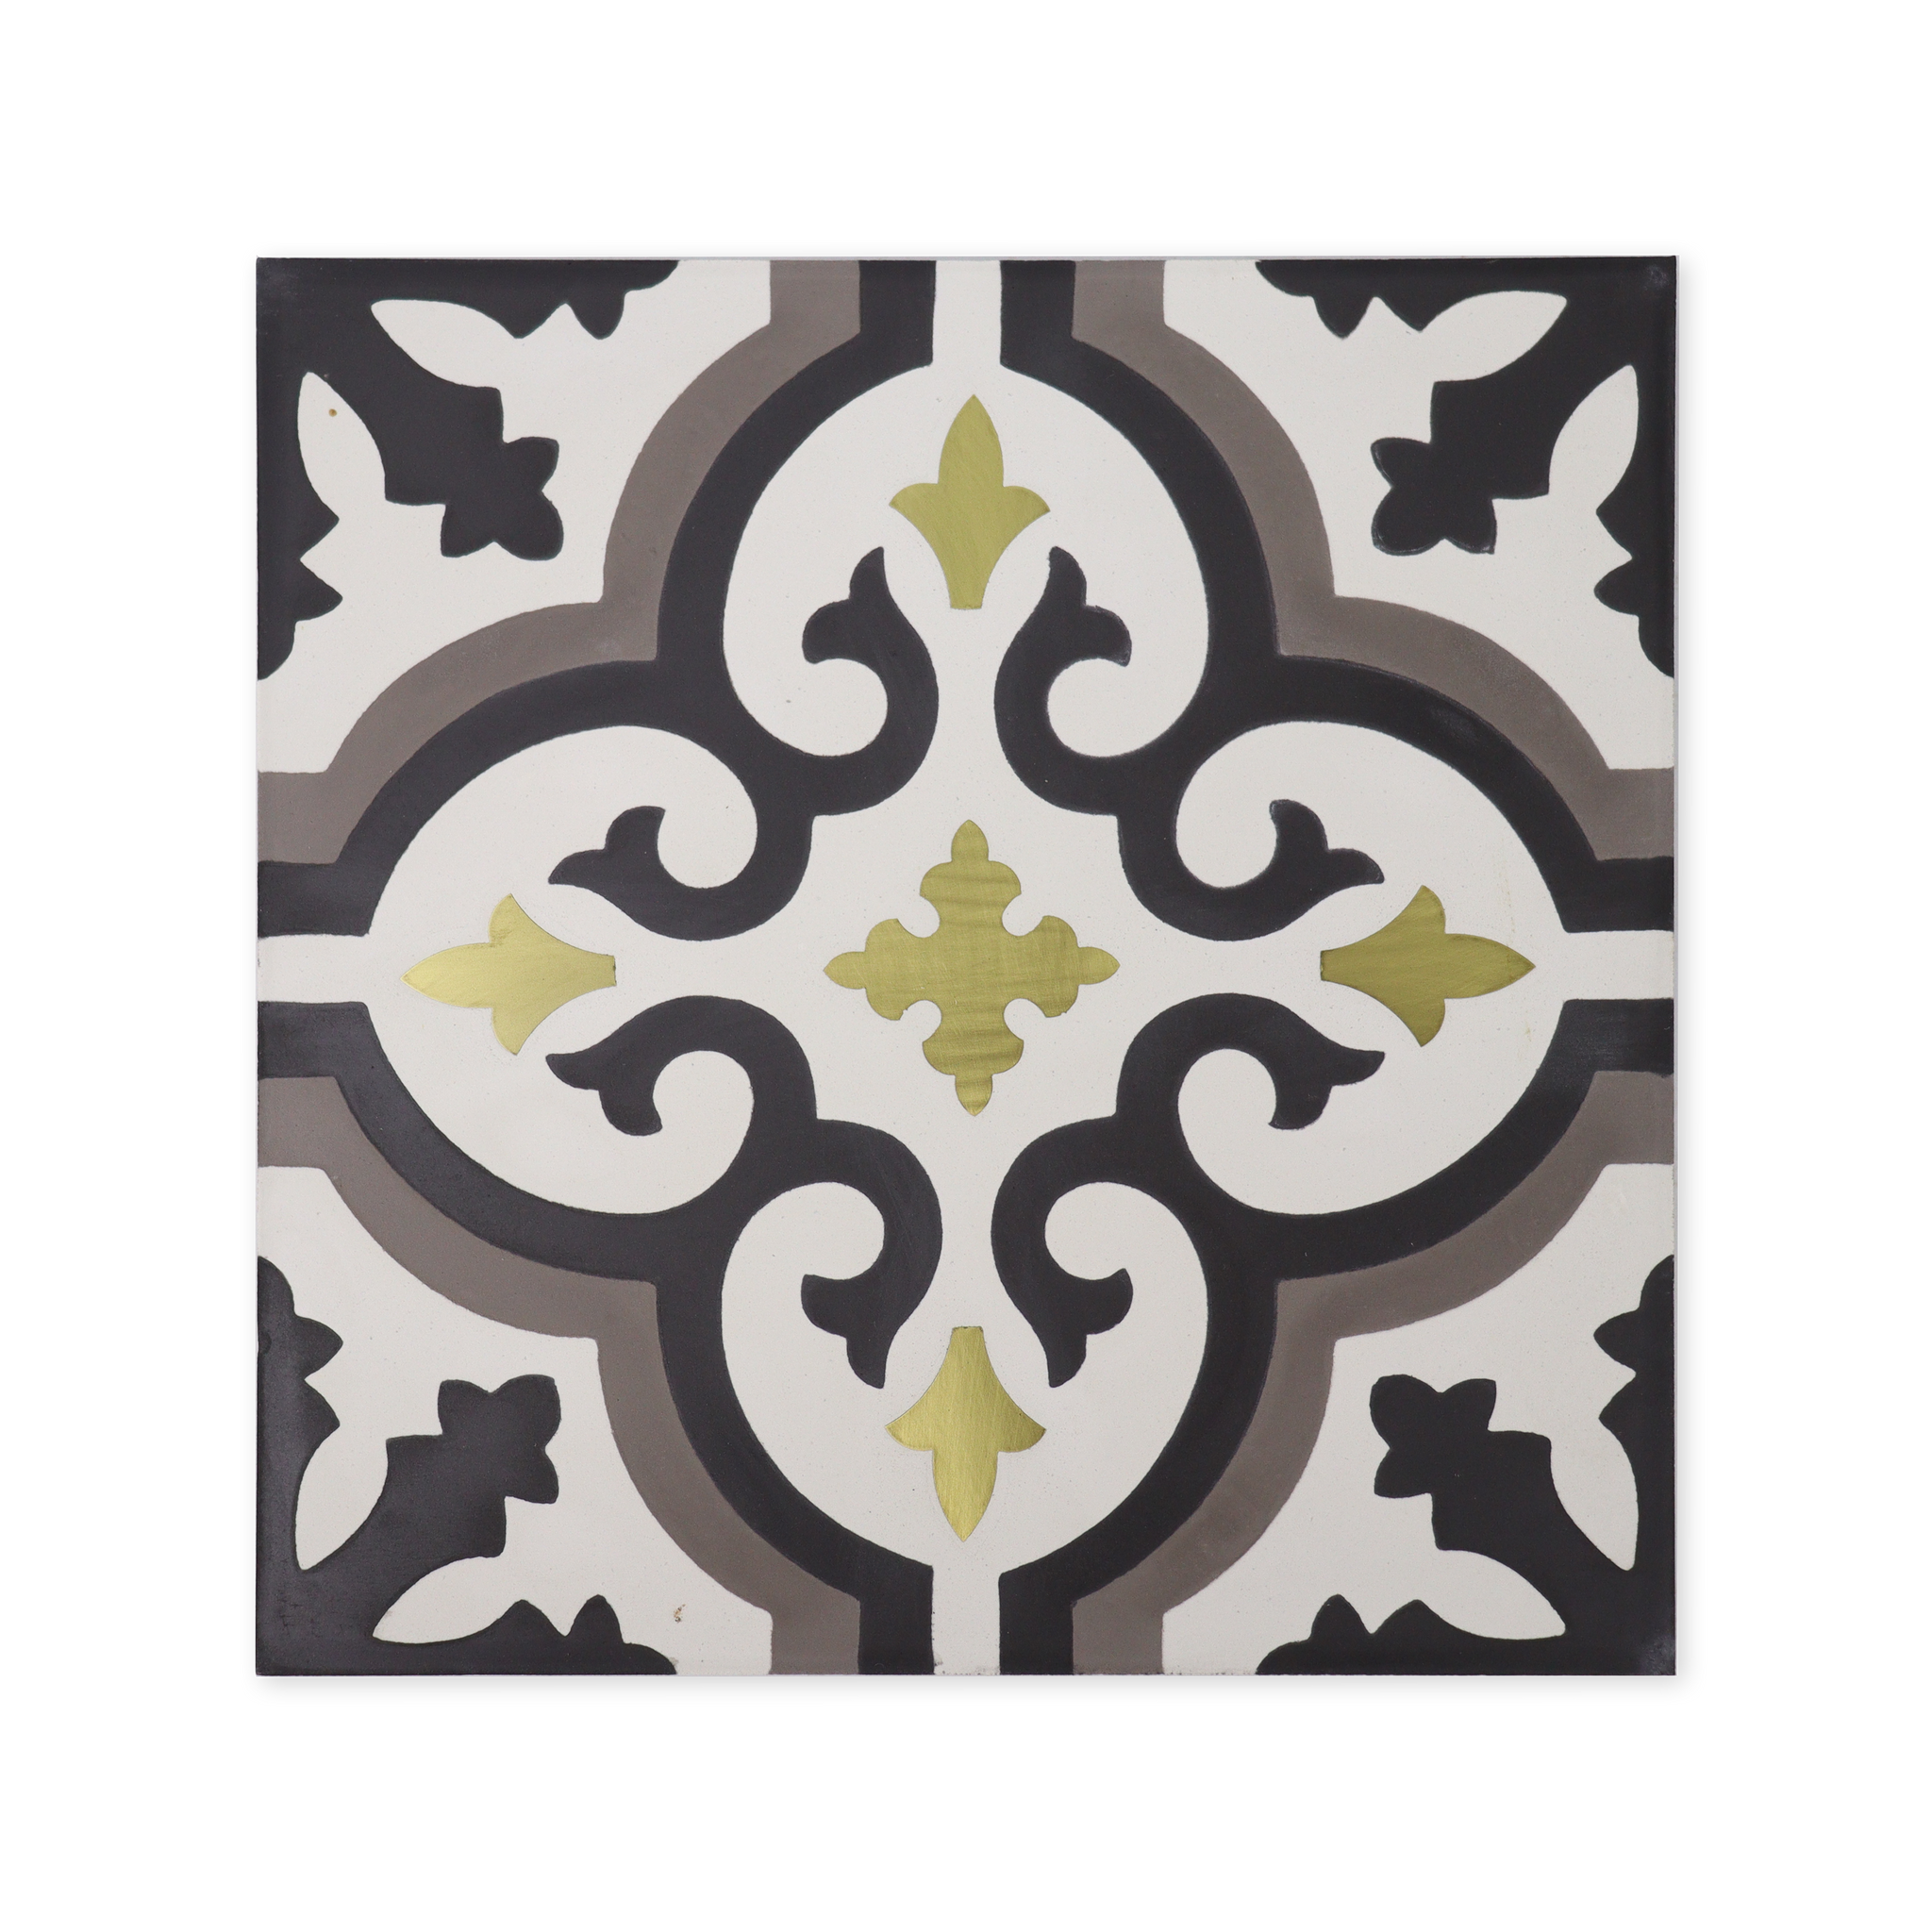 Cadiz Cement Tile with Brass Inlay